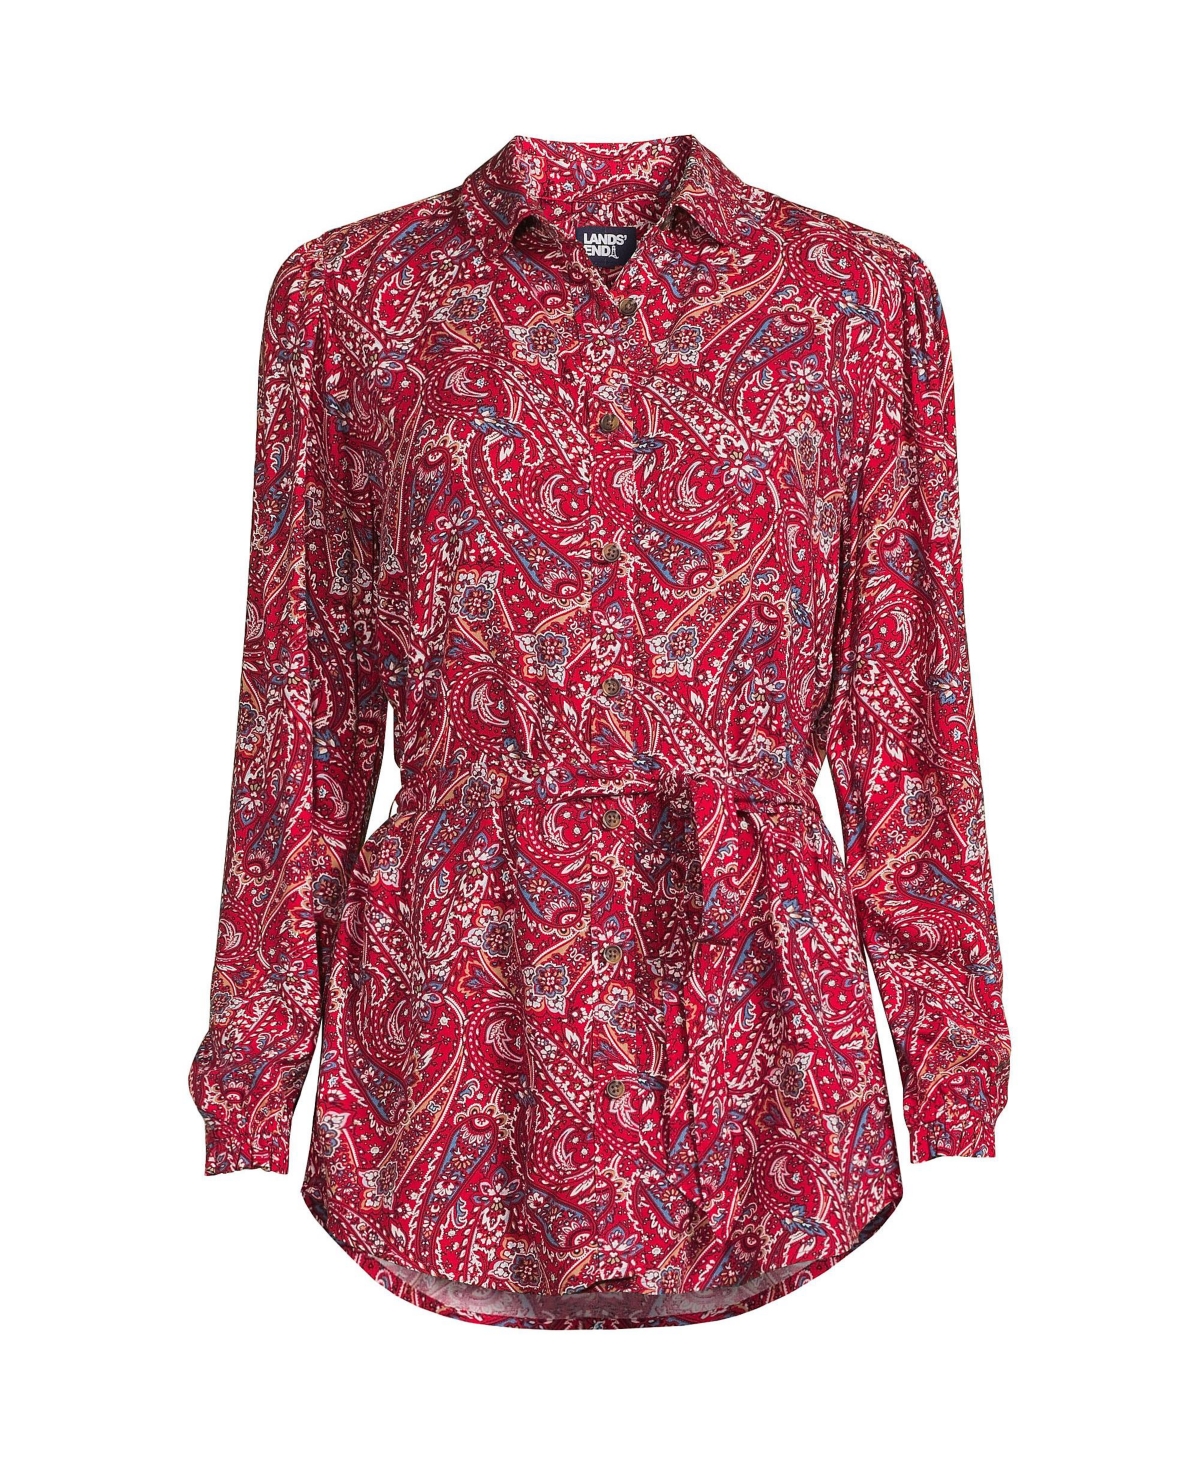 Women's Plus Size Rayon Tie Waist Shirt - Rich red swirl paisley